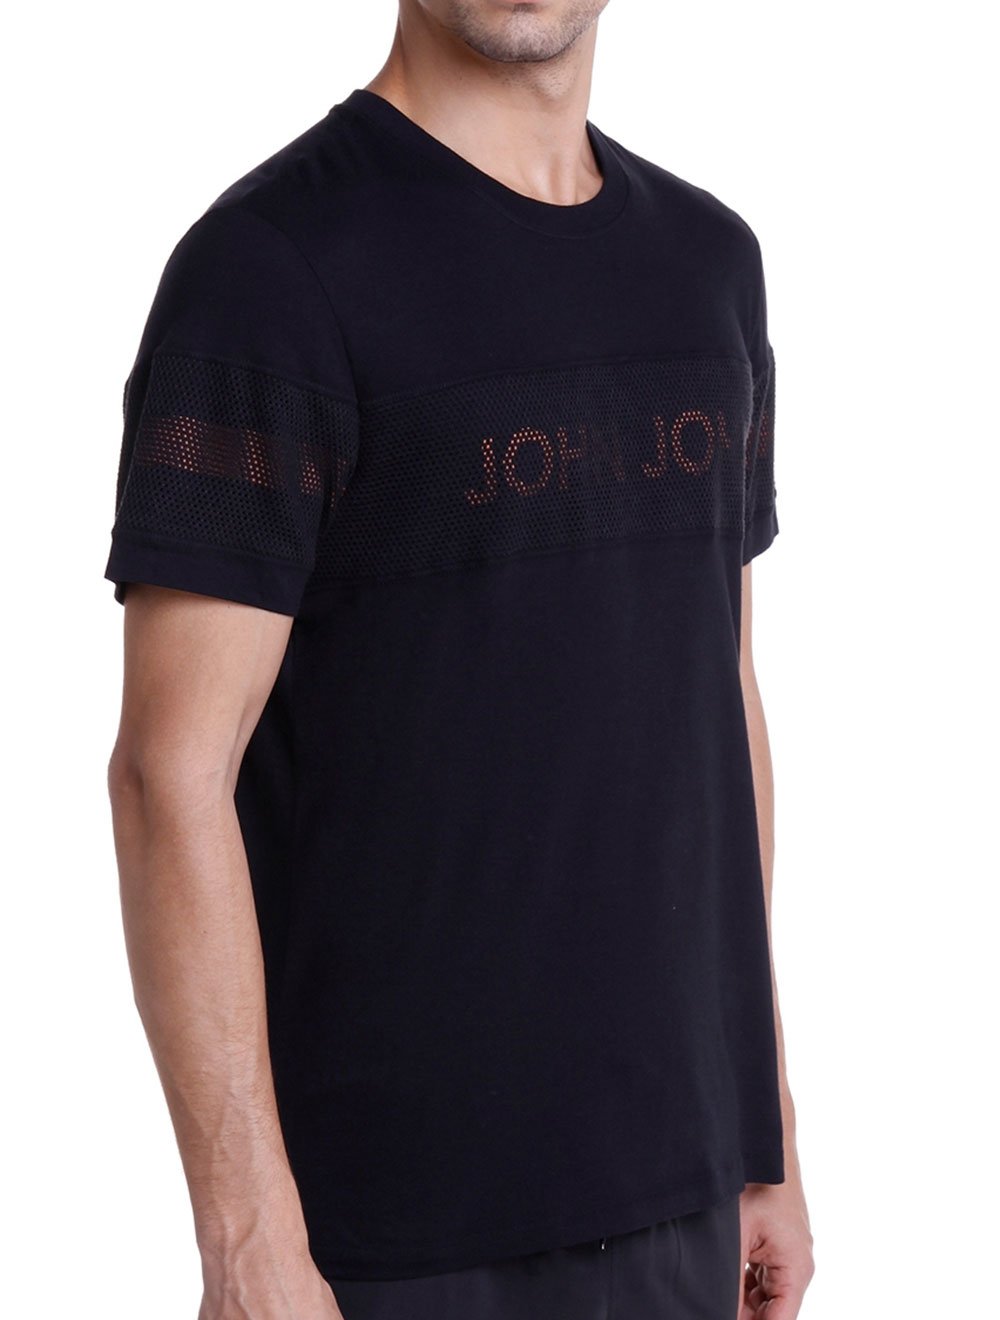 Camiseta John John Logo Espelho Trincado